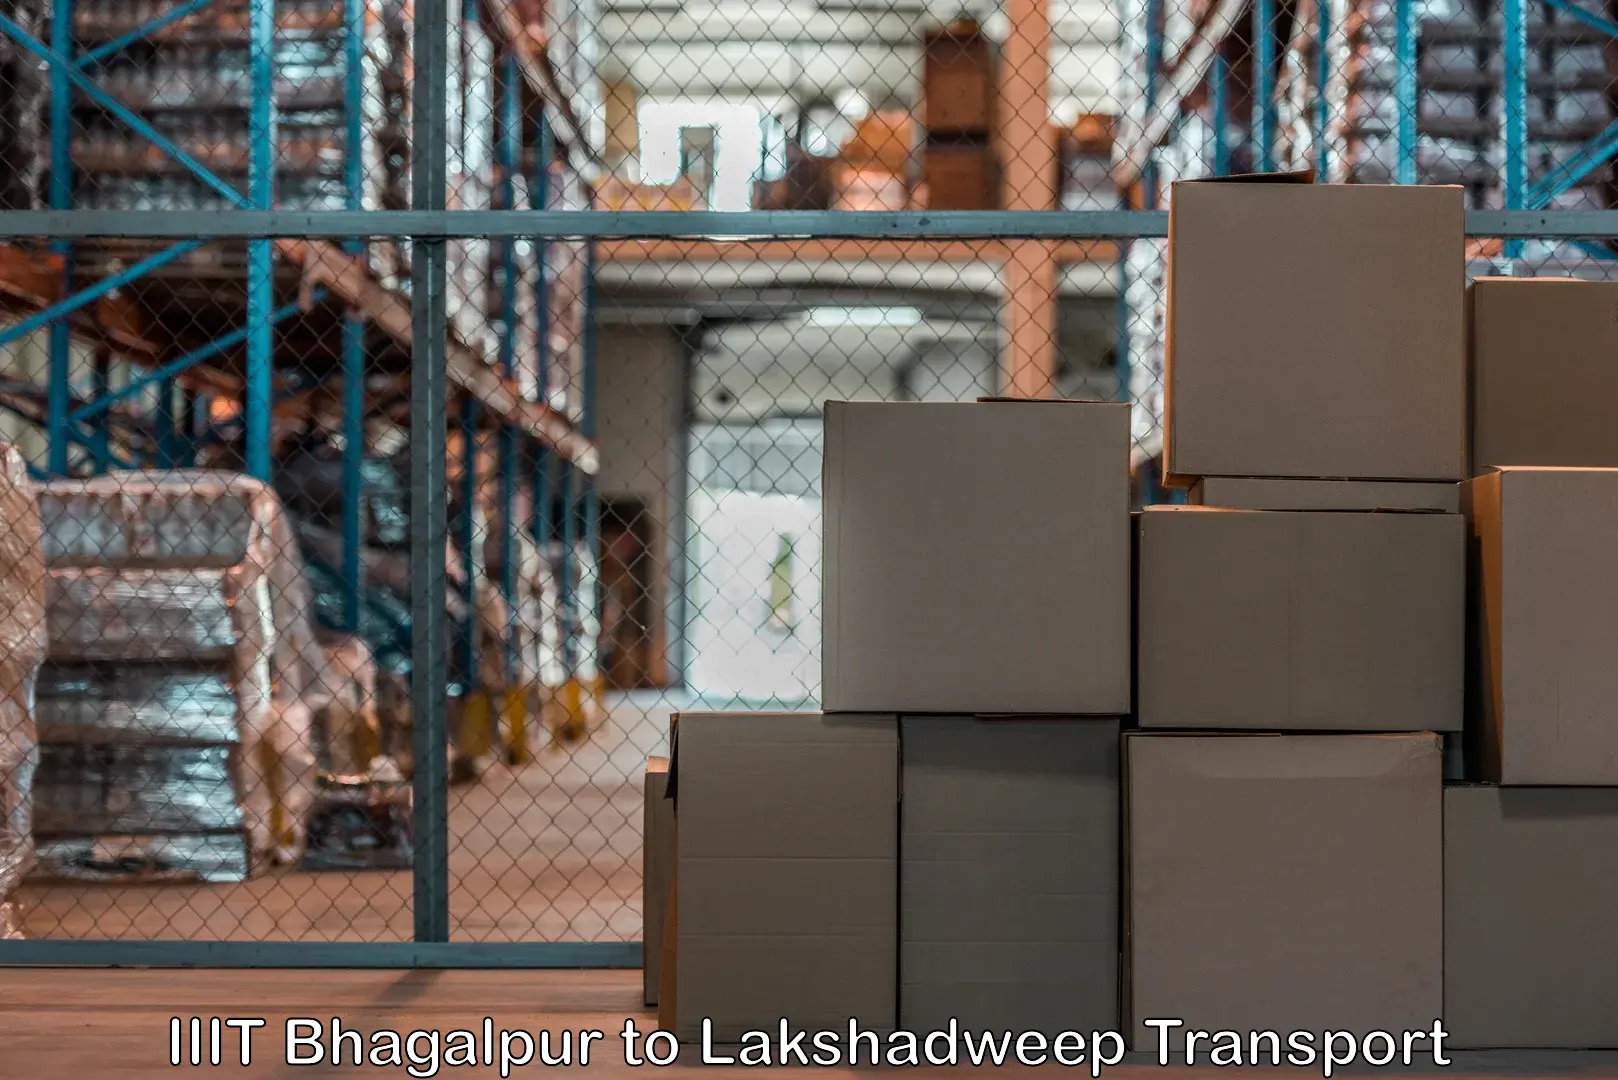 Delivery service IIIT Bhagalpur to Lakshadweep